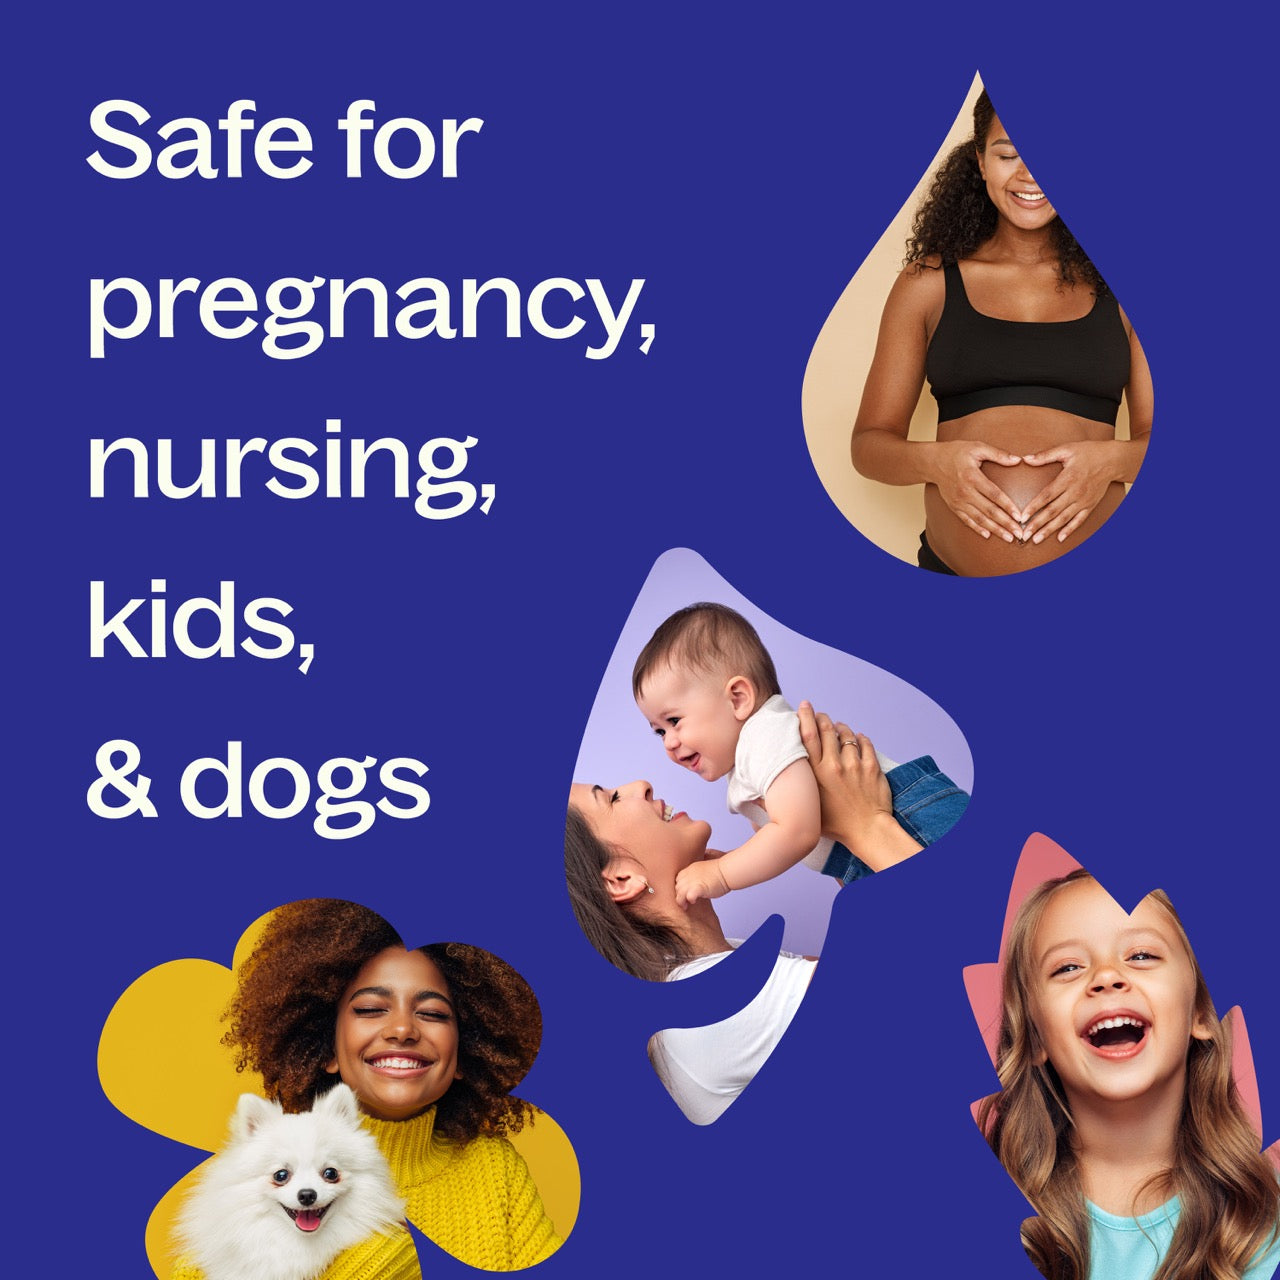 vetiver essential oil is safe for pregnancy, nursing, kids, and dogs